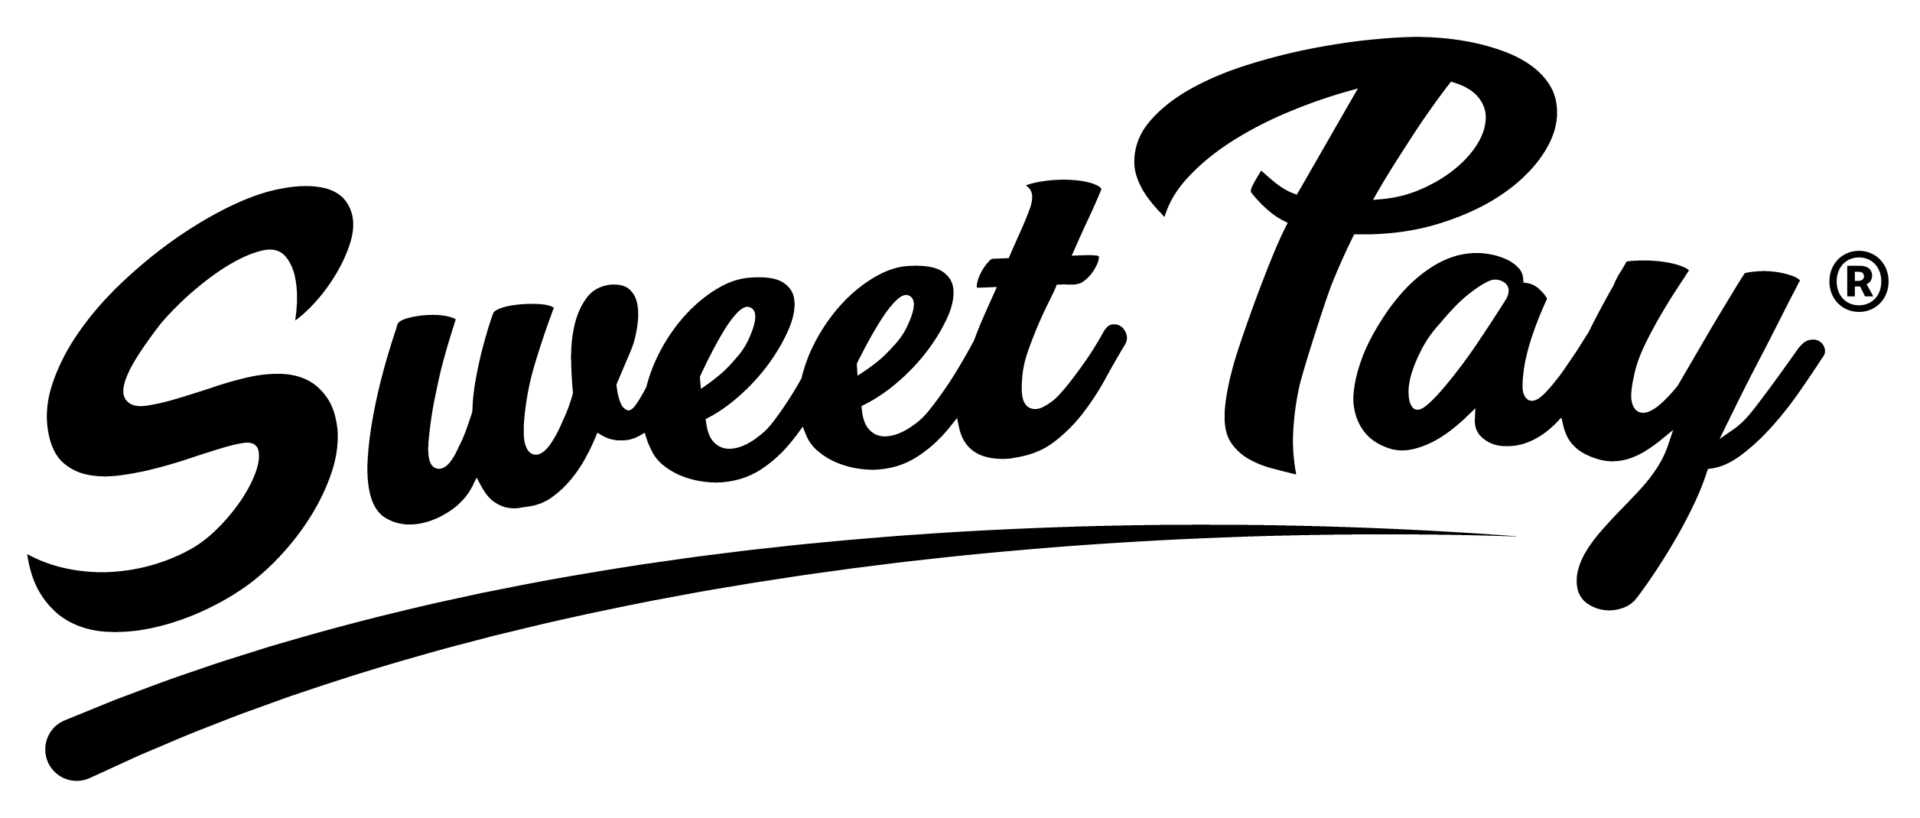 SweetPay Logo Black logo